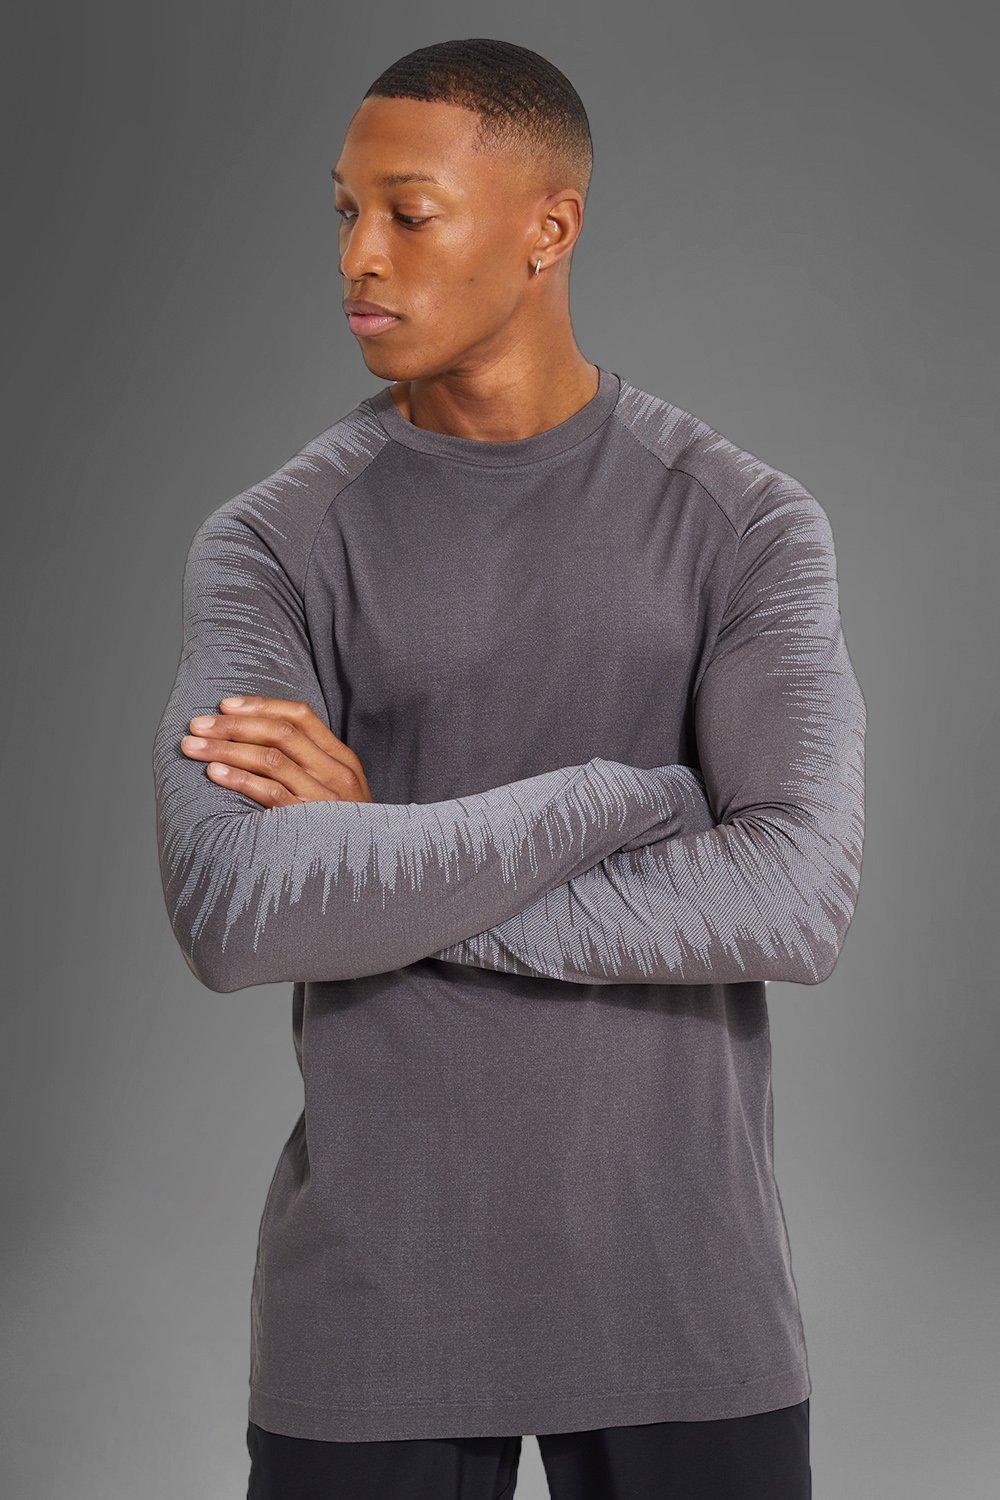 men's man active seamless stripe long sleeve top - grey - s, grey